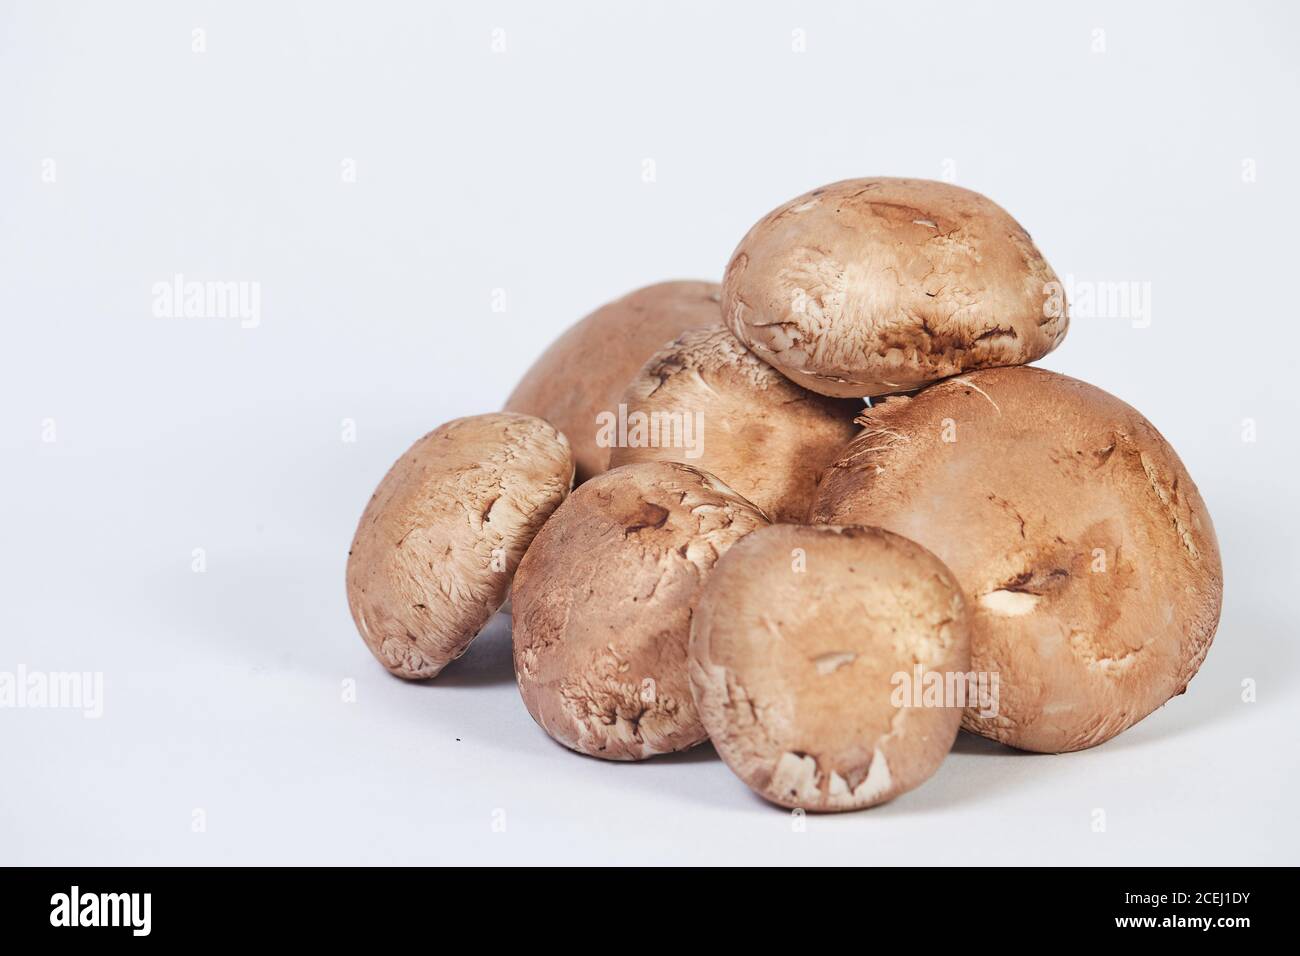 Champignon mushroom, brown variety, isolated on white background. Stock Photo